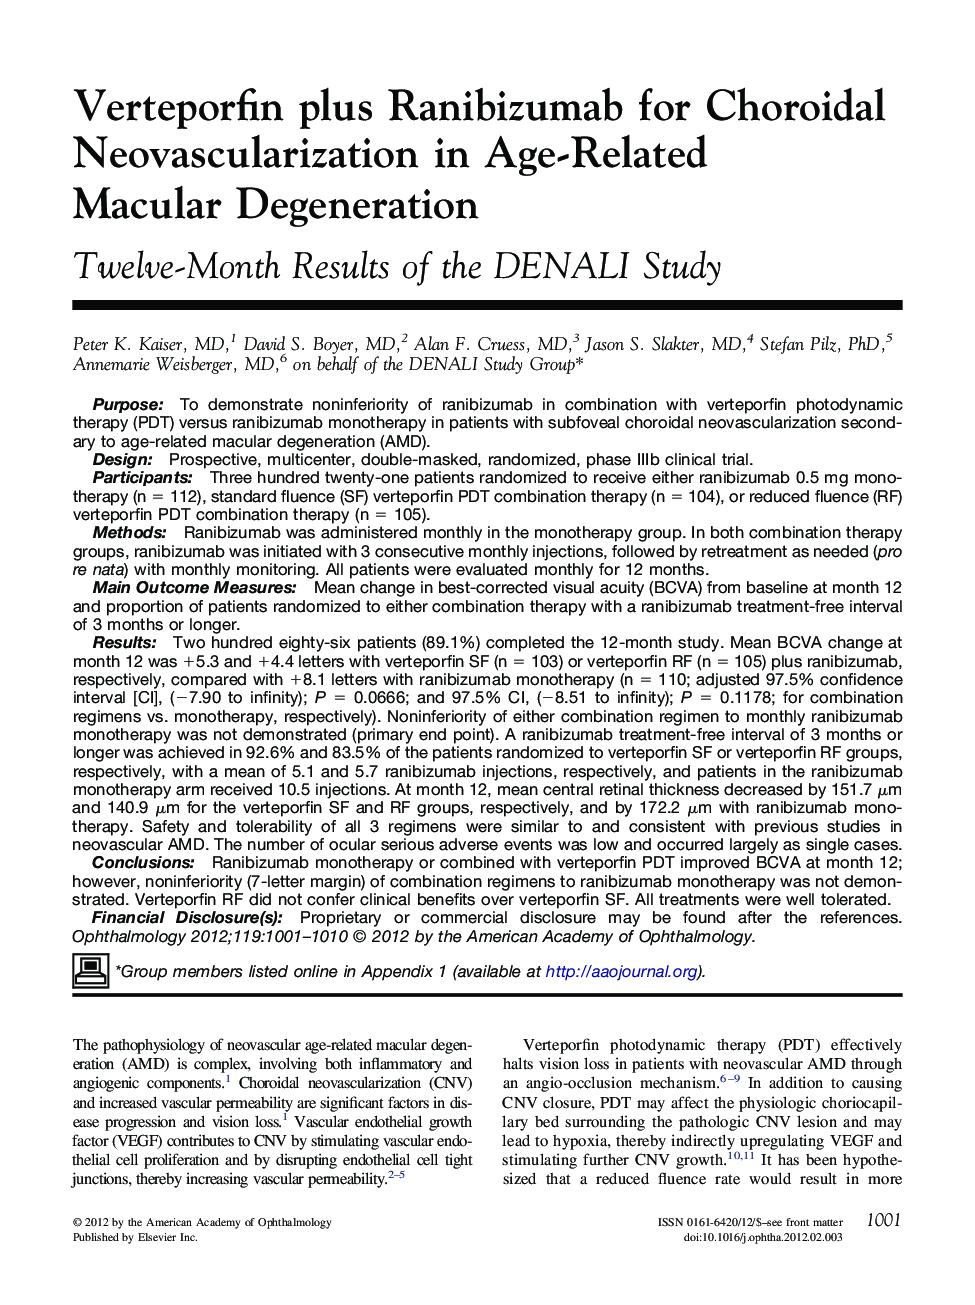 Verteporfin plus Ranibizumab for Choroidal Neovascularization in Age-Related Macular Degeneration